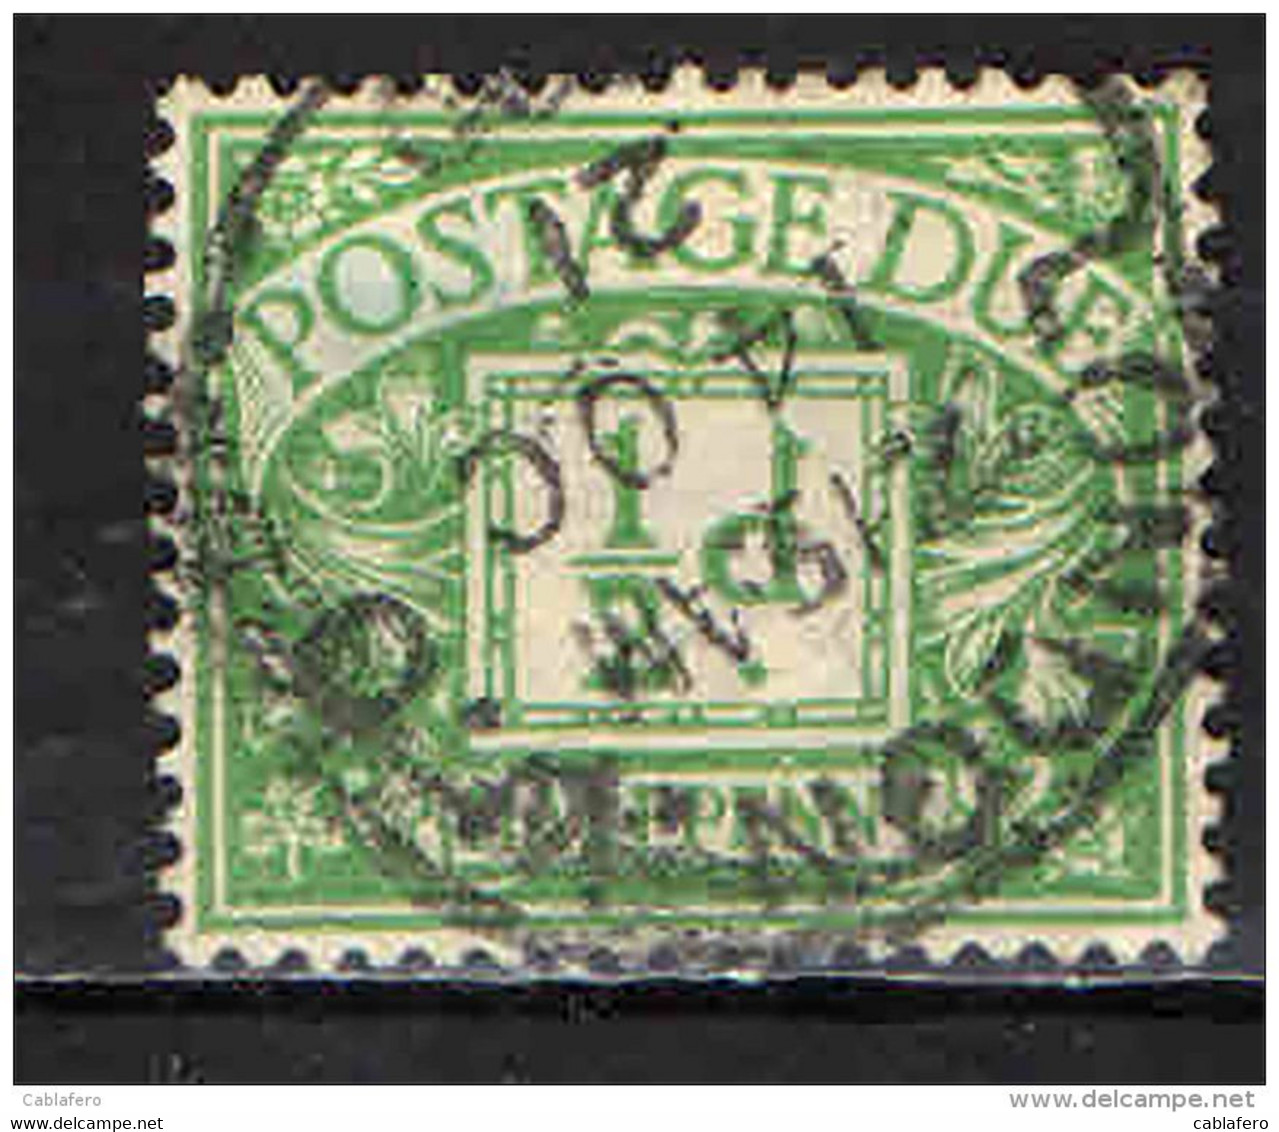 GRAN BRETAGNA - 1914 - POSTAGE DUE STAMP - VALORE DA 1/2 P. - USATO - Revenue Stamps